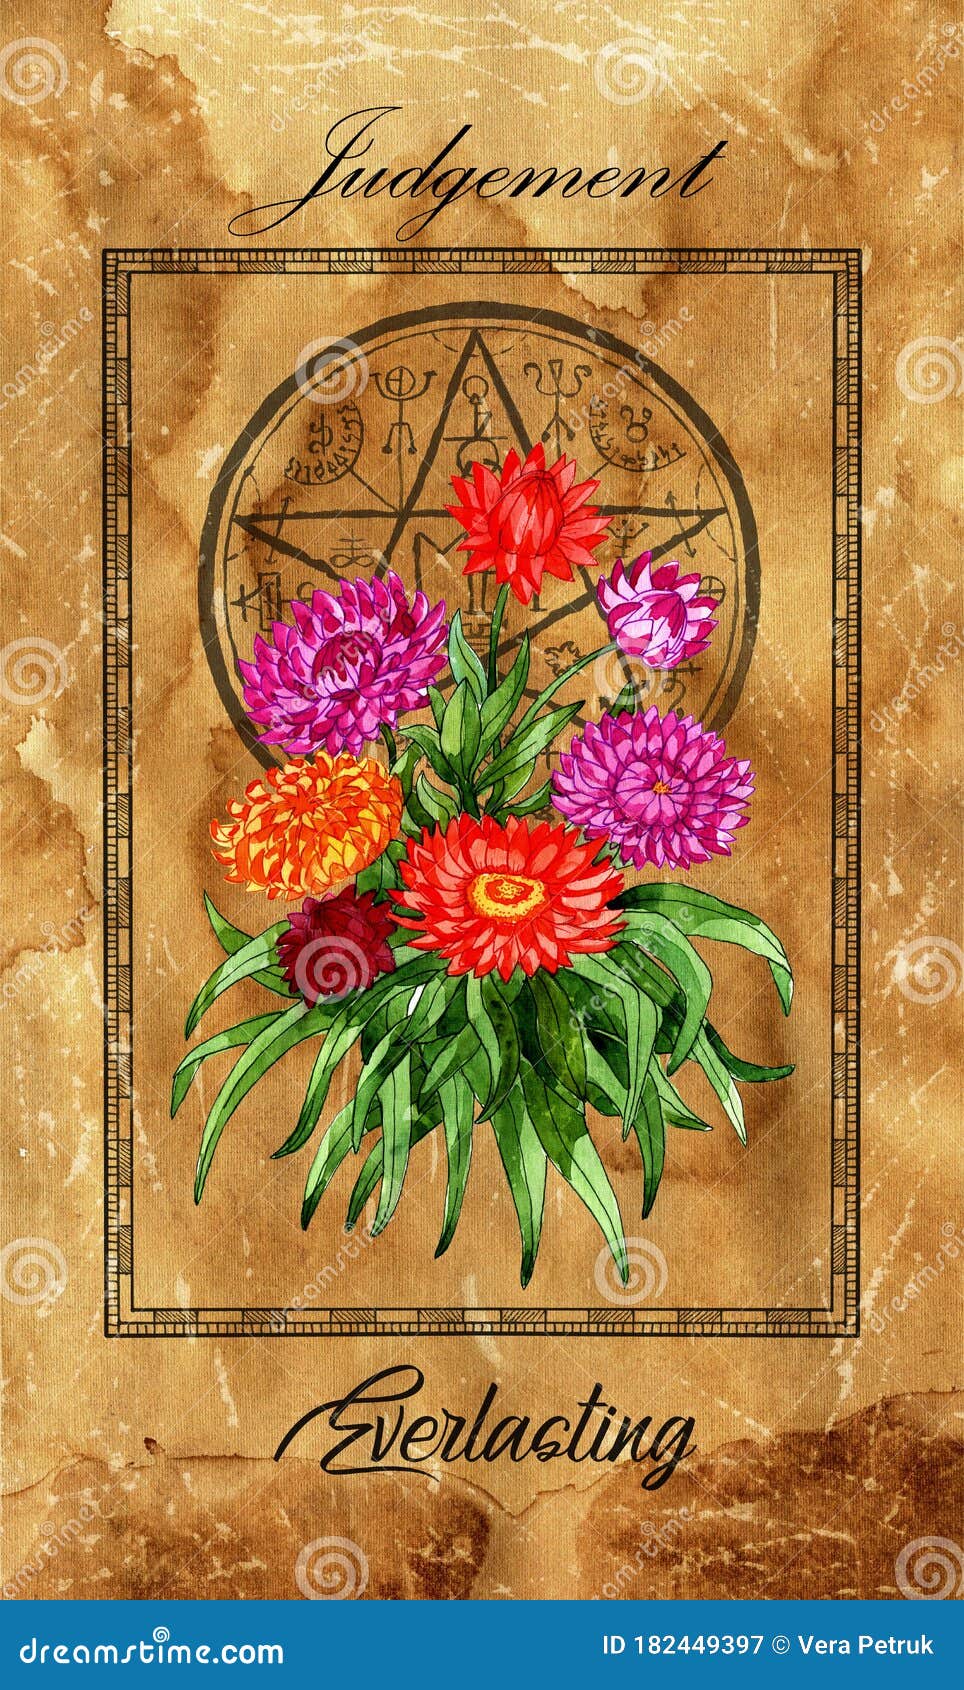 judgement. major arcana tarot card with everlasting and magic seal